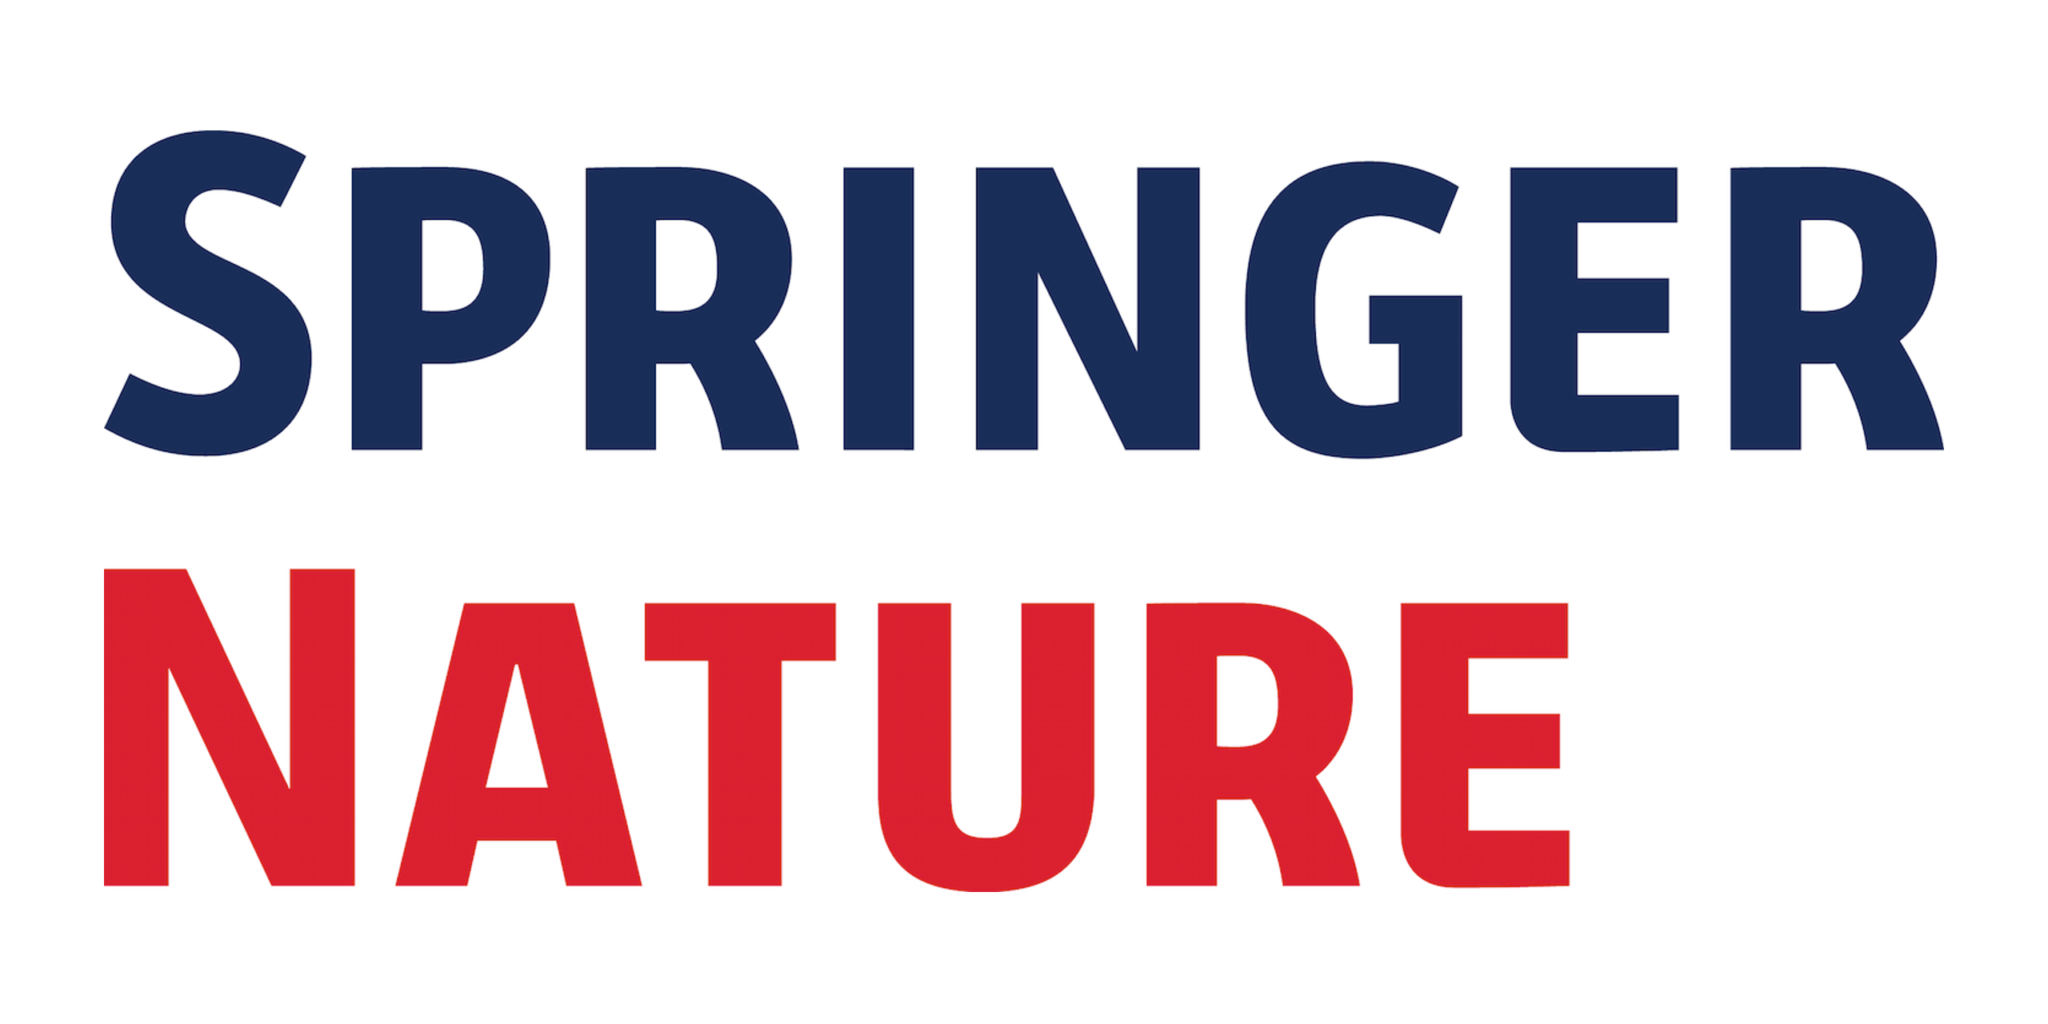 Издательство Springer. Springer лого. Springer nature. Springer nature logo.